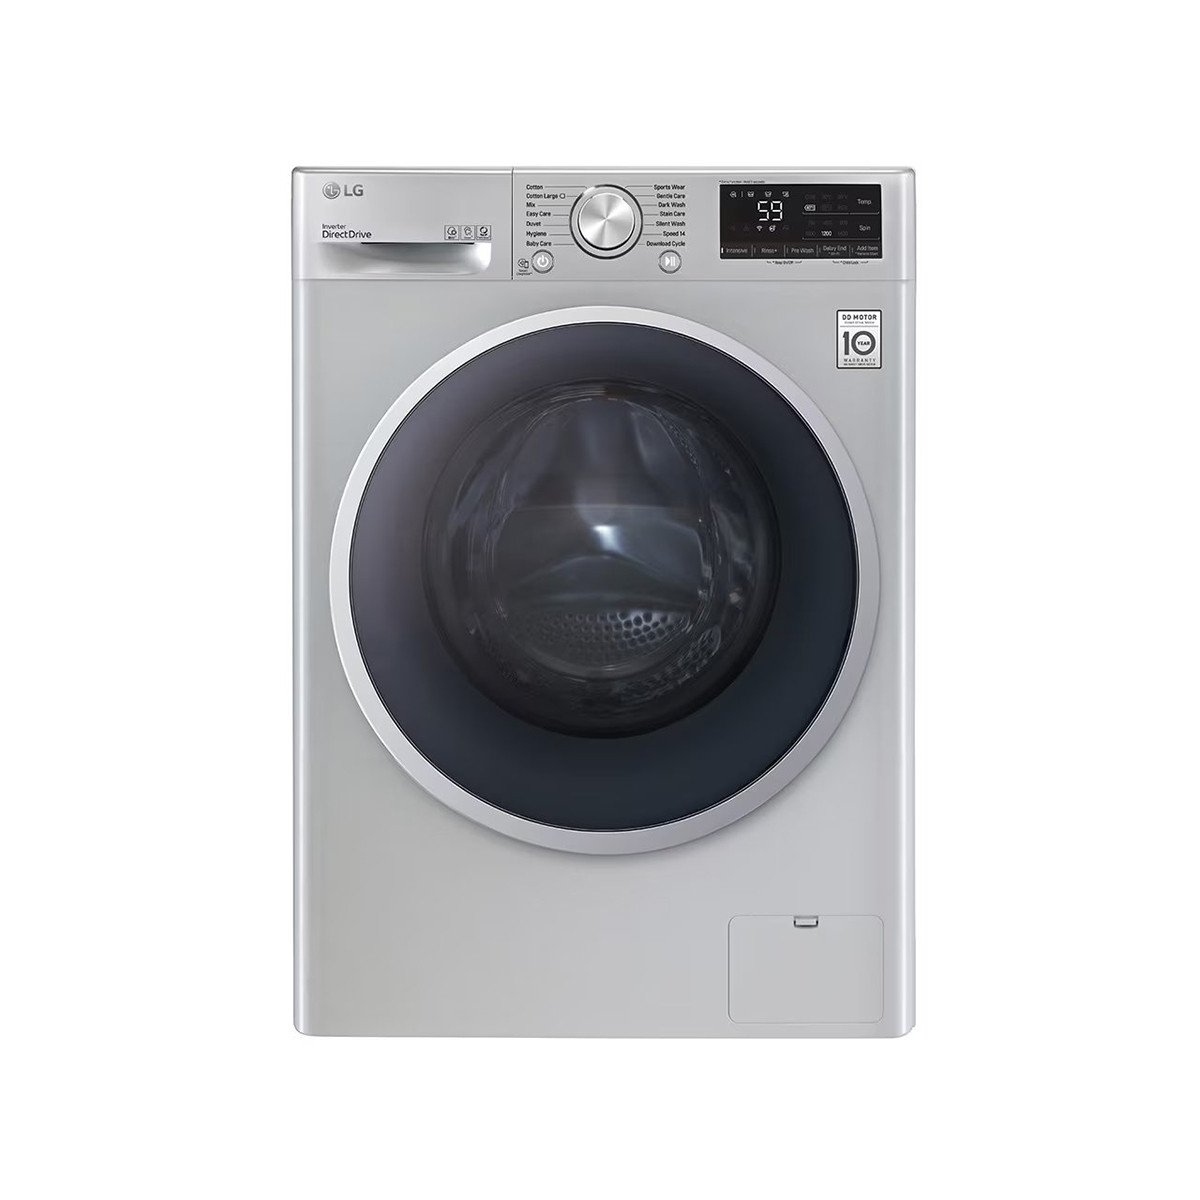 LG - Washing Machine 9 Kg Vivace Washing Machine, with AI DD technology Silver